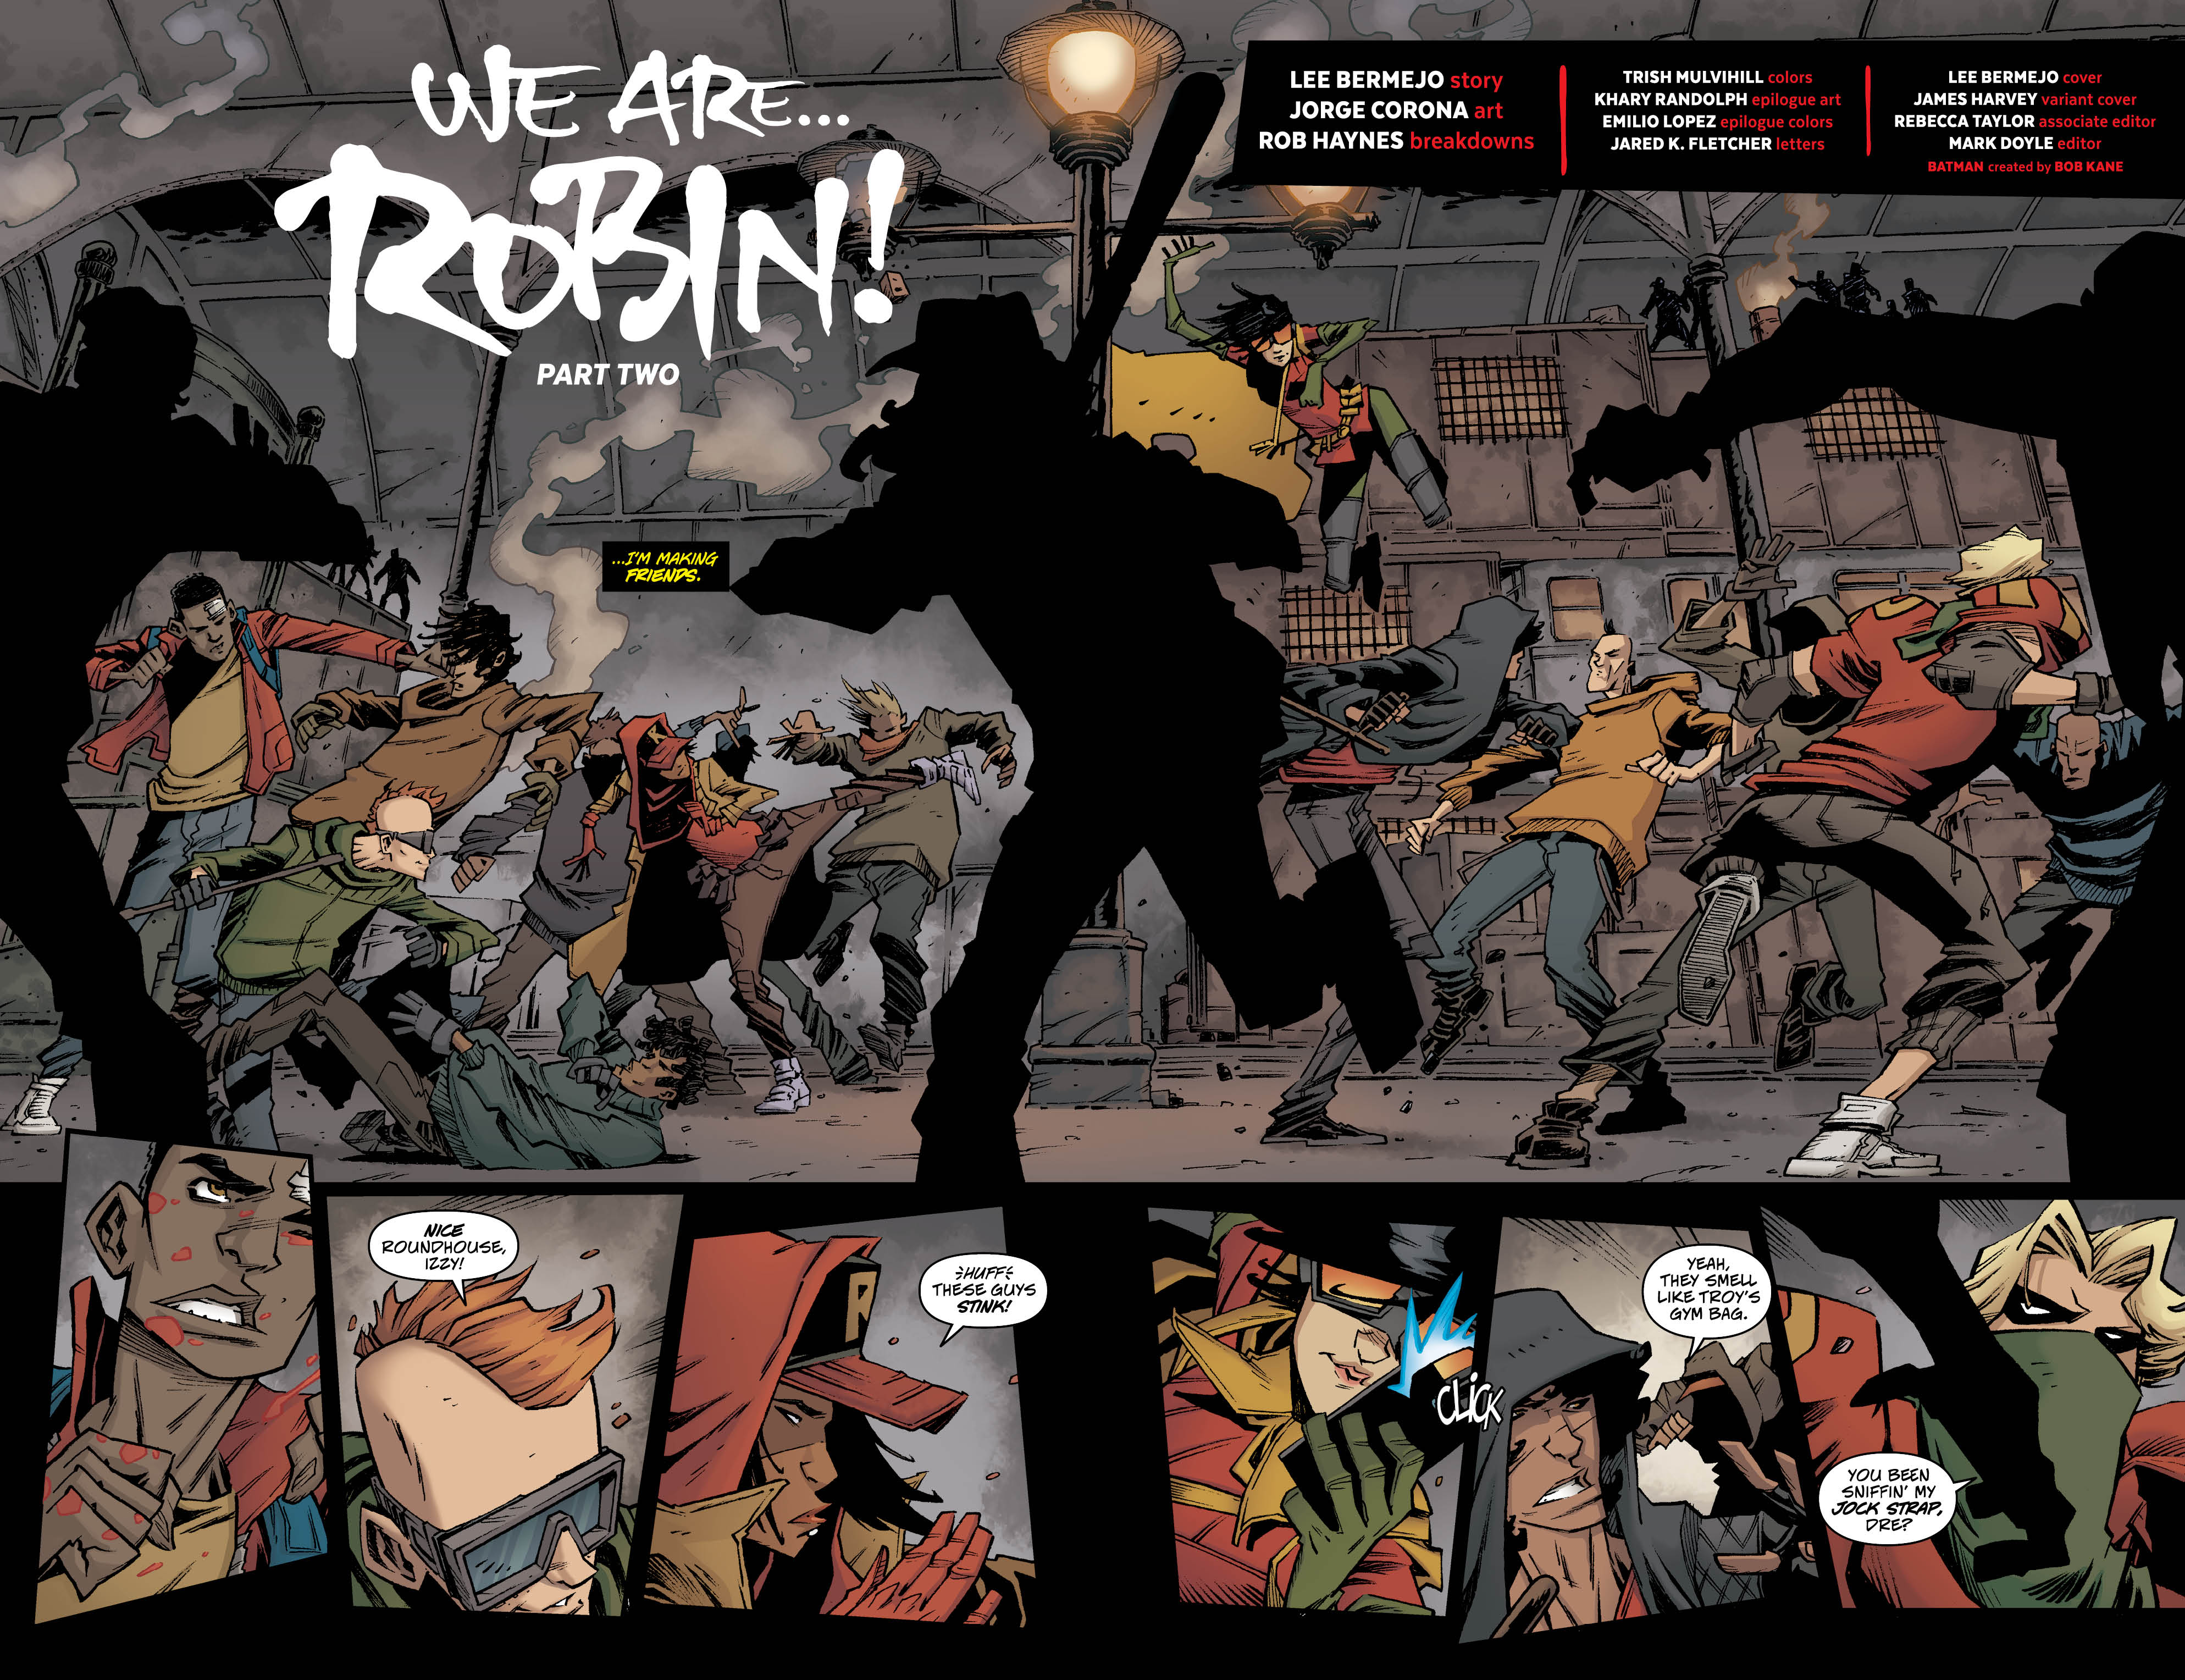 We Are Robin The Vigilante Business review